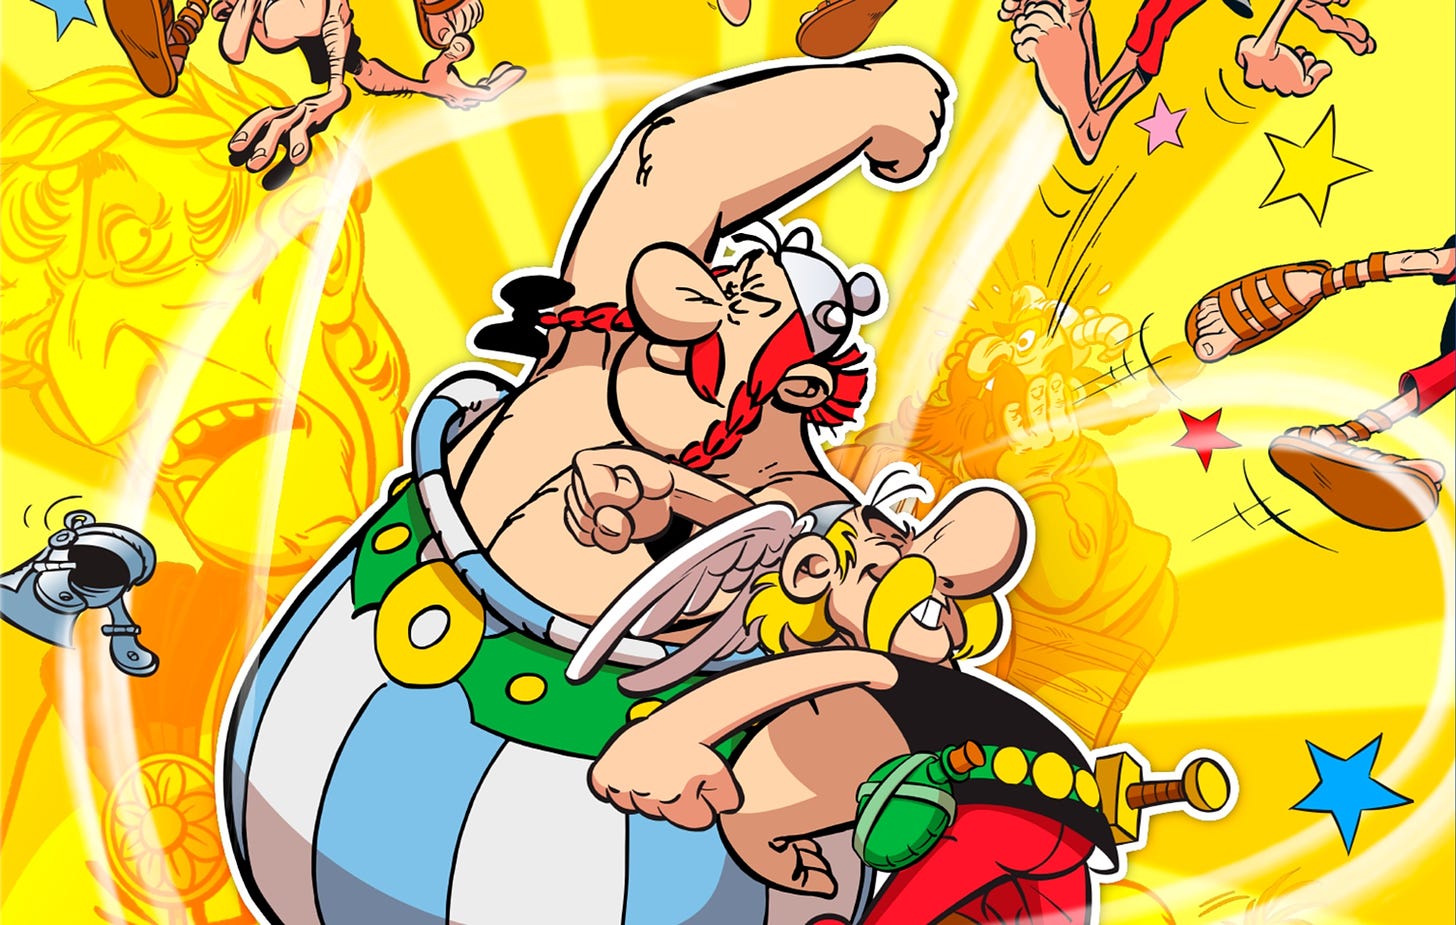 Asterix & Obelix: Slap Them All' brawls its way to November release